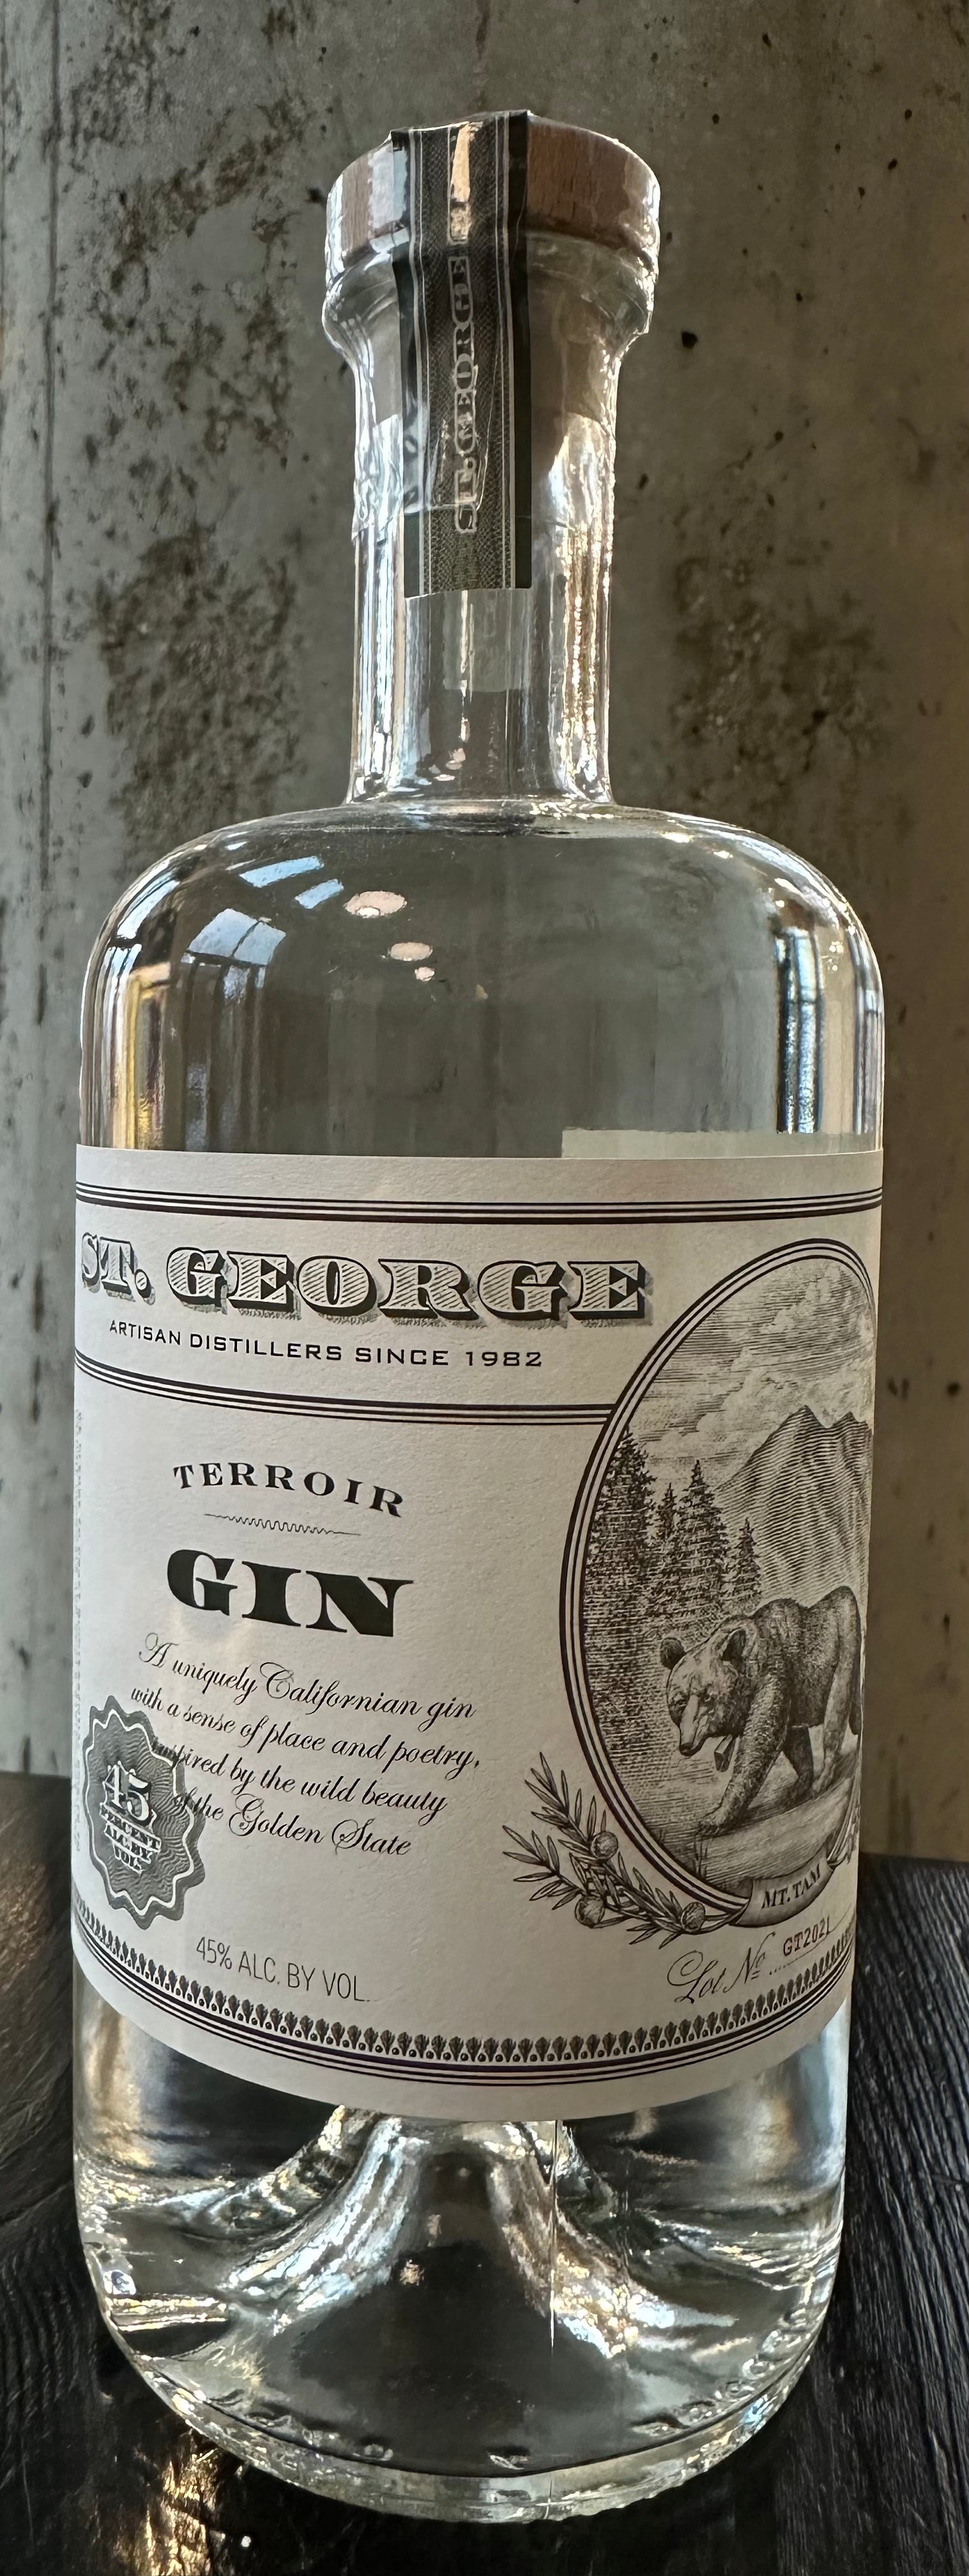 St. George "Terroir" Gin